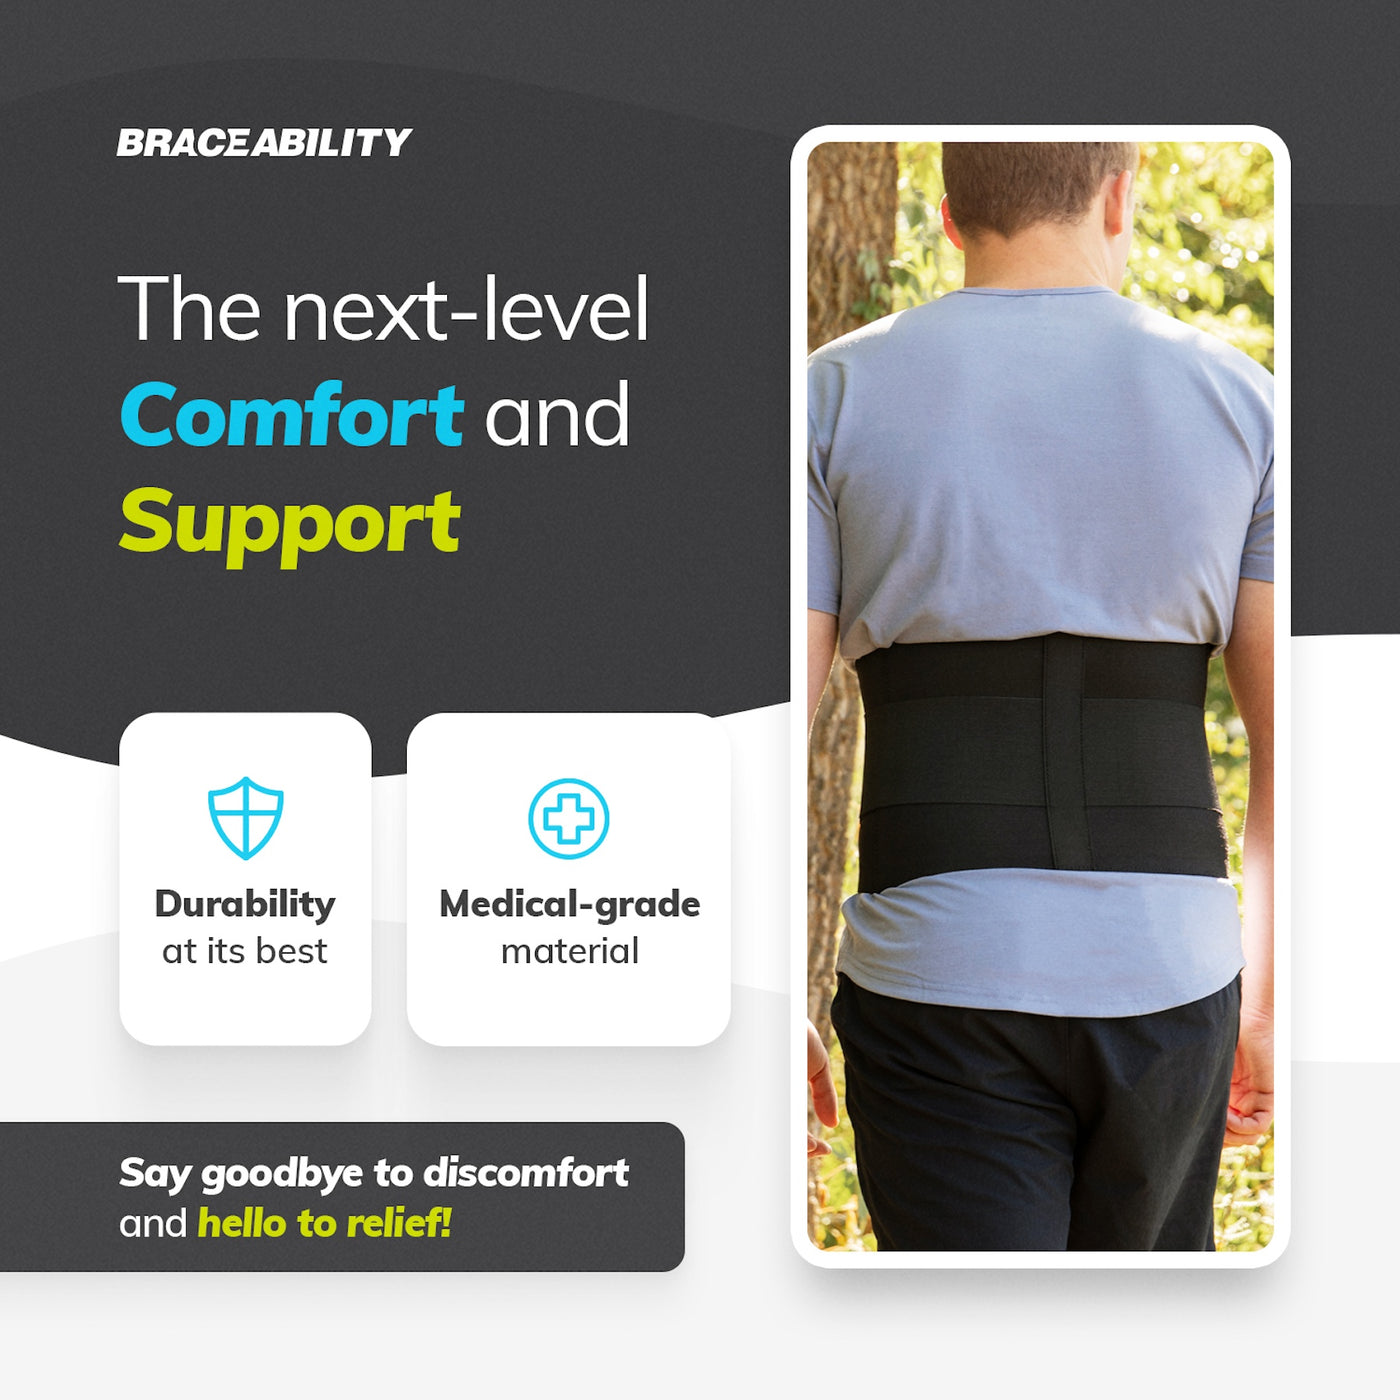 1 pack Medical Premium Belt - Relieve Back Pain & Sciatica, Lower Back Pain  Relief Brace for Men Women, Sciatica Pain Relief Devices (1 pack)